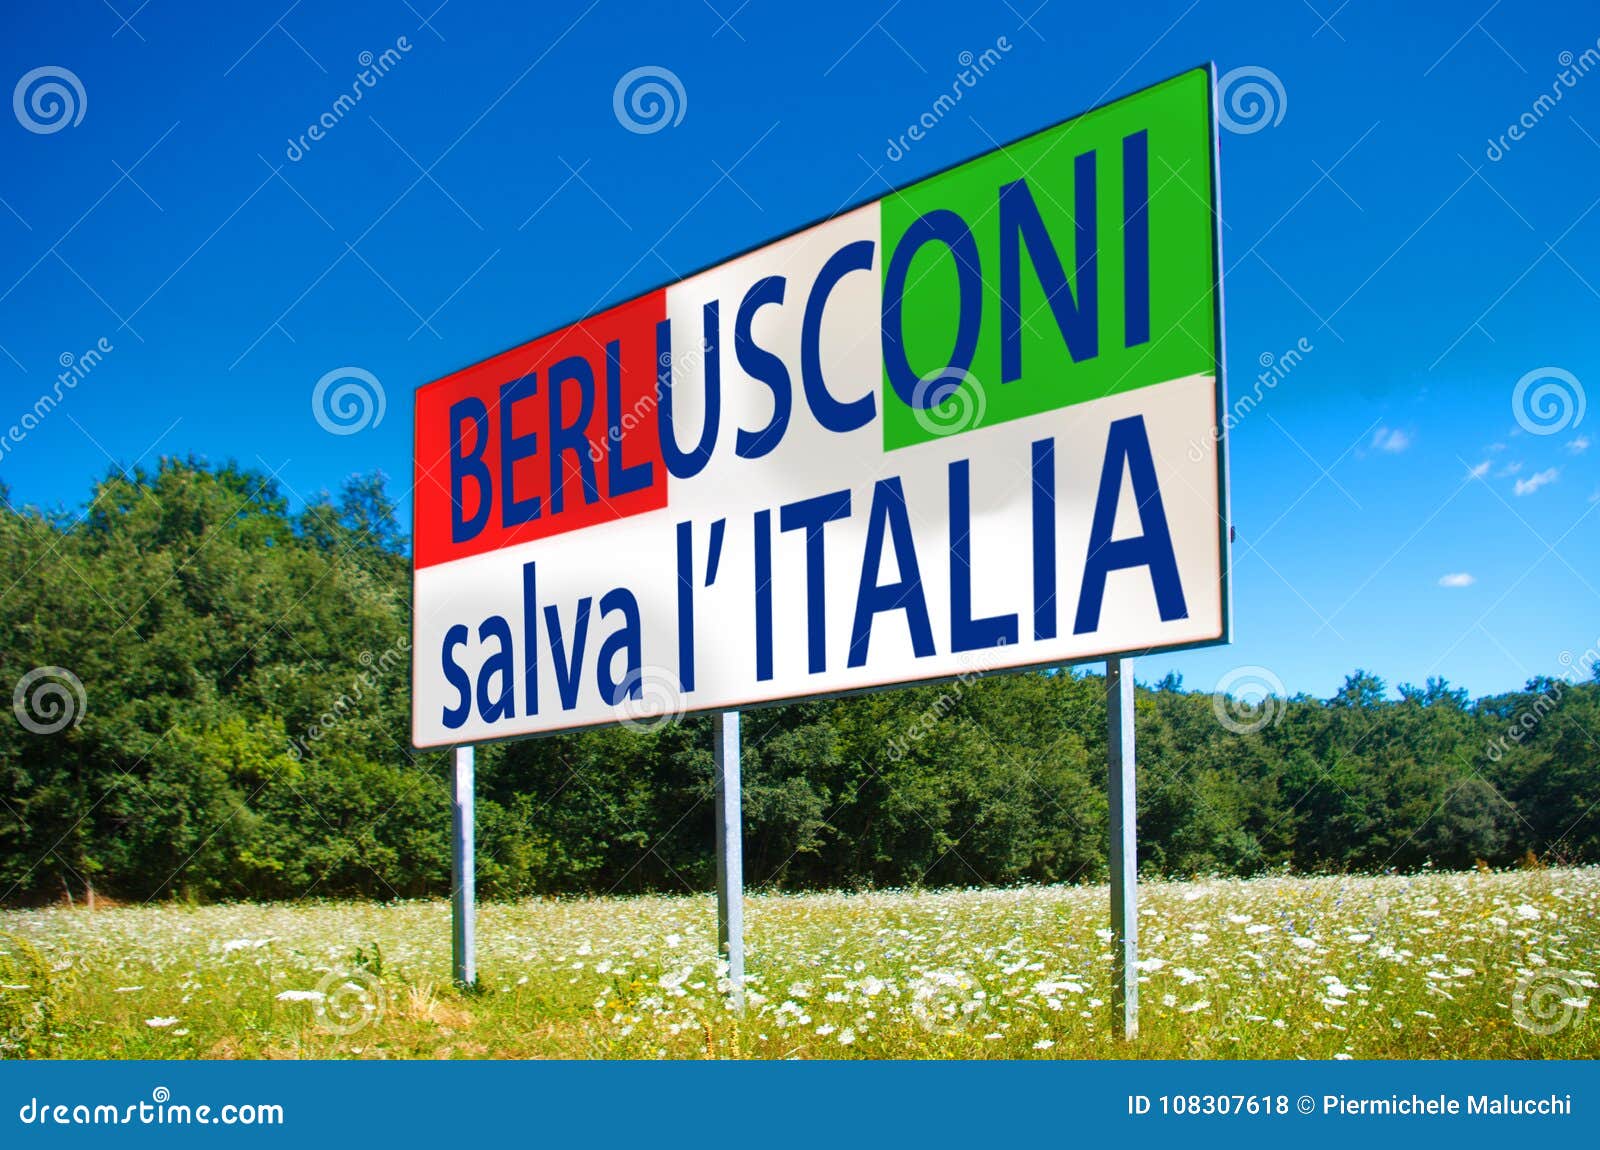 in the next elections save italy, vote berlusconi, forza italia